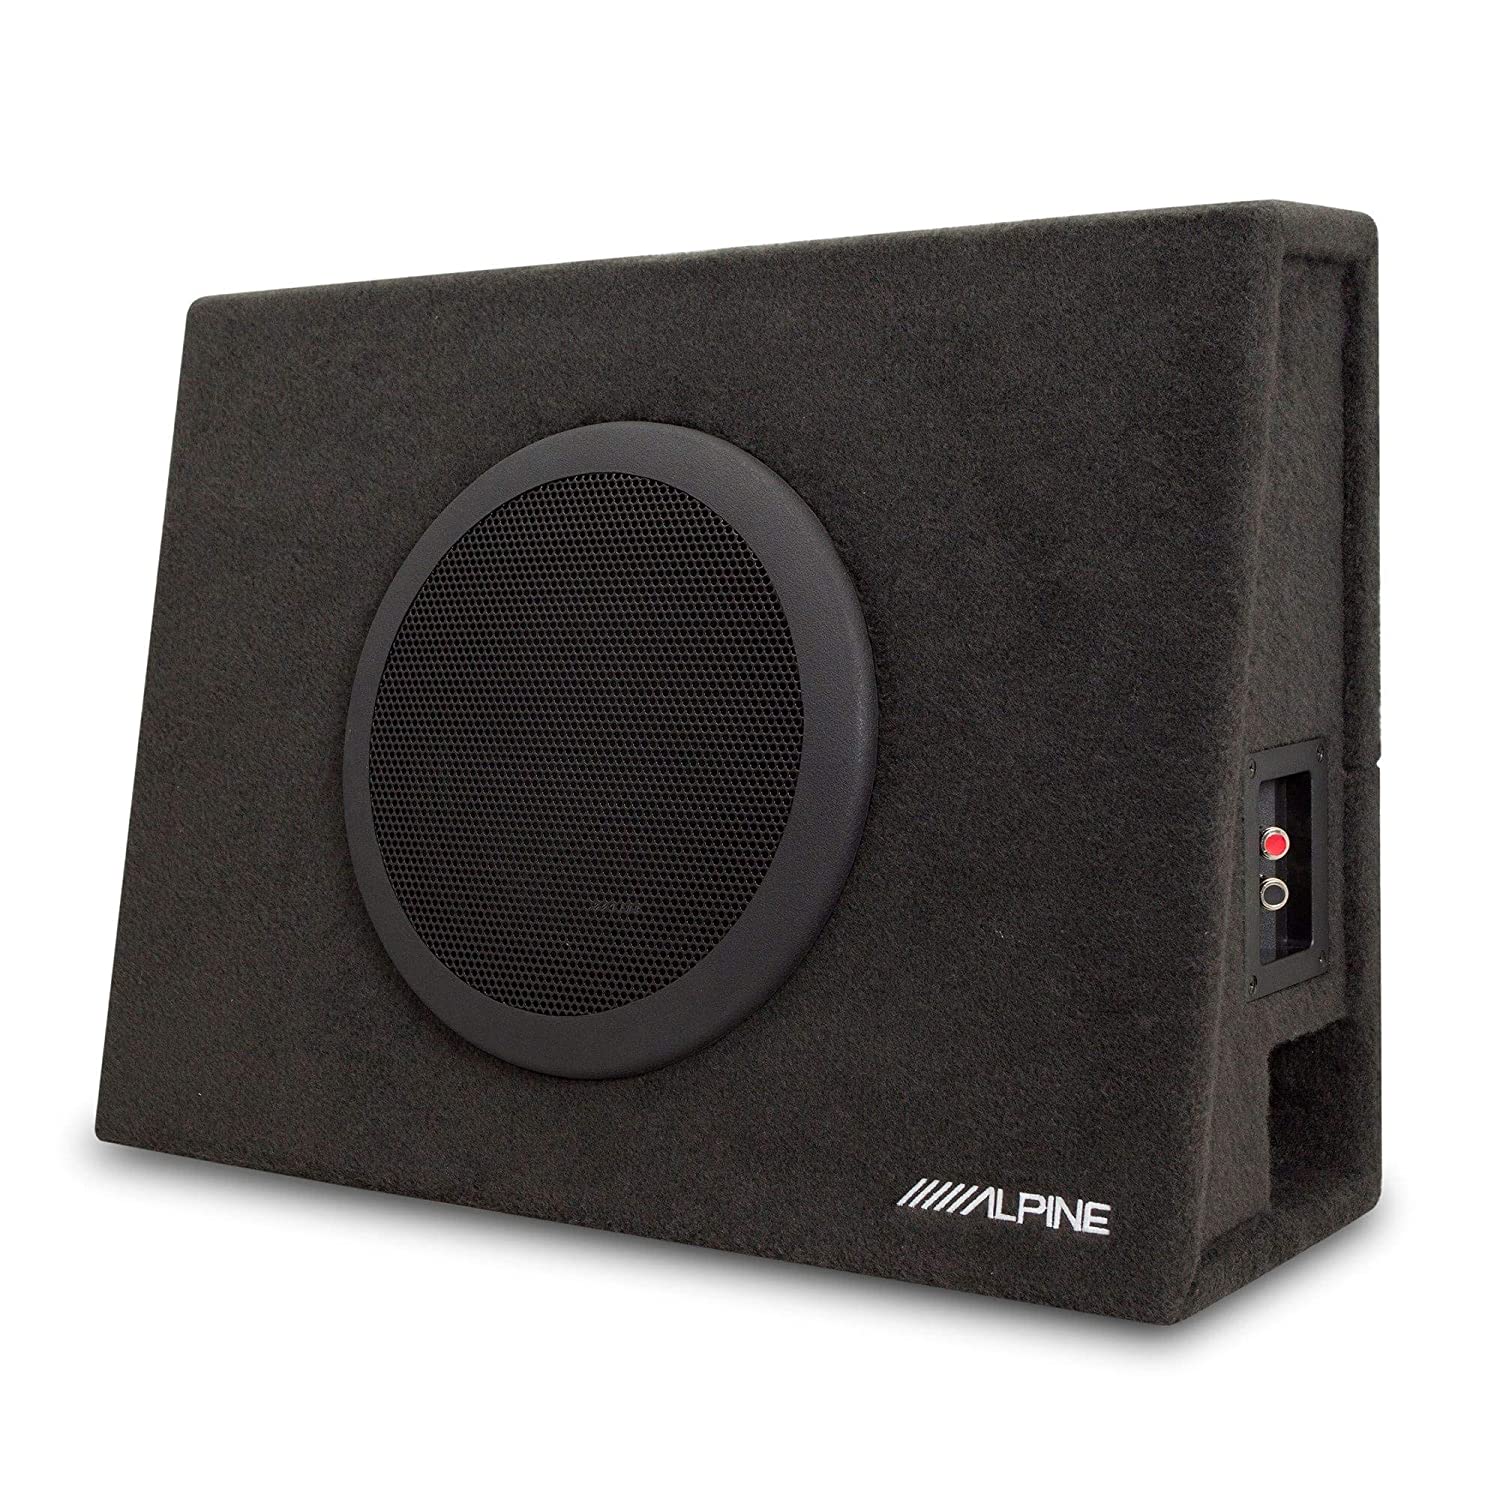 Micro speaker 13x18x2.5mms dual speakers and enclosure 